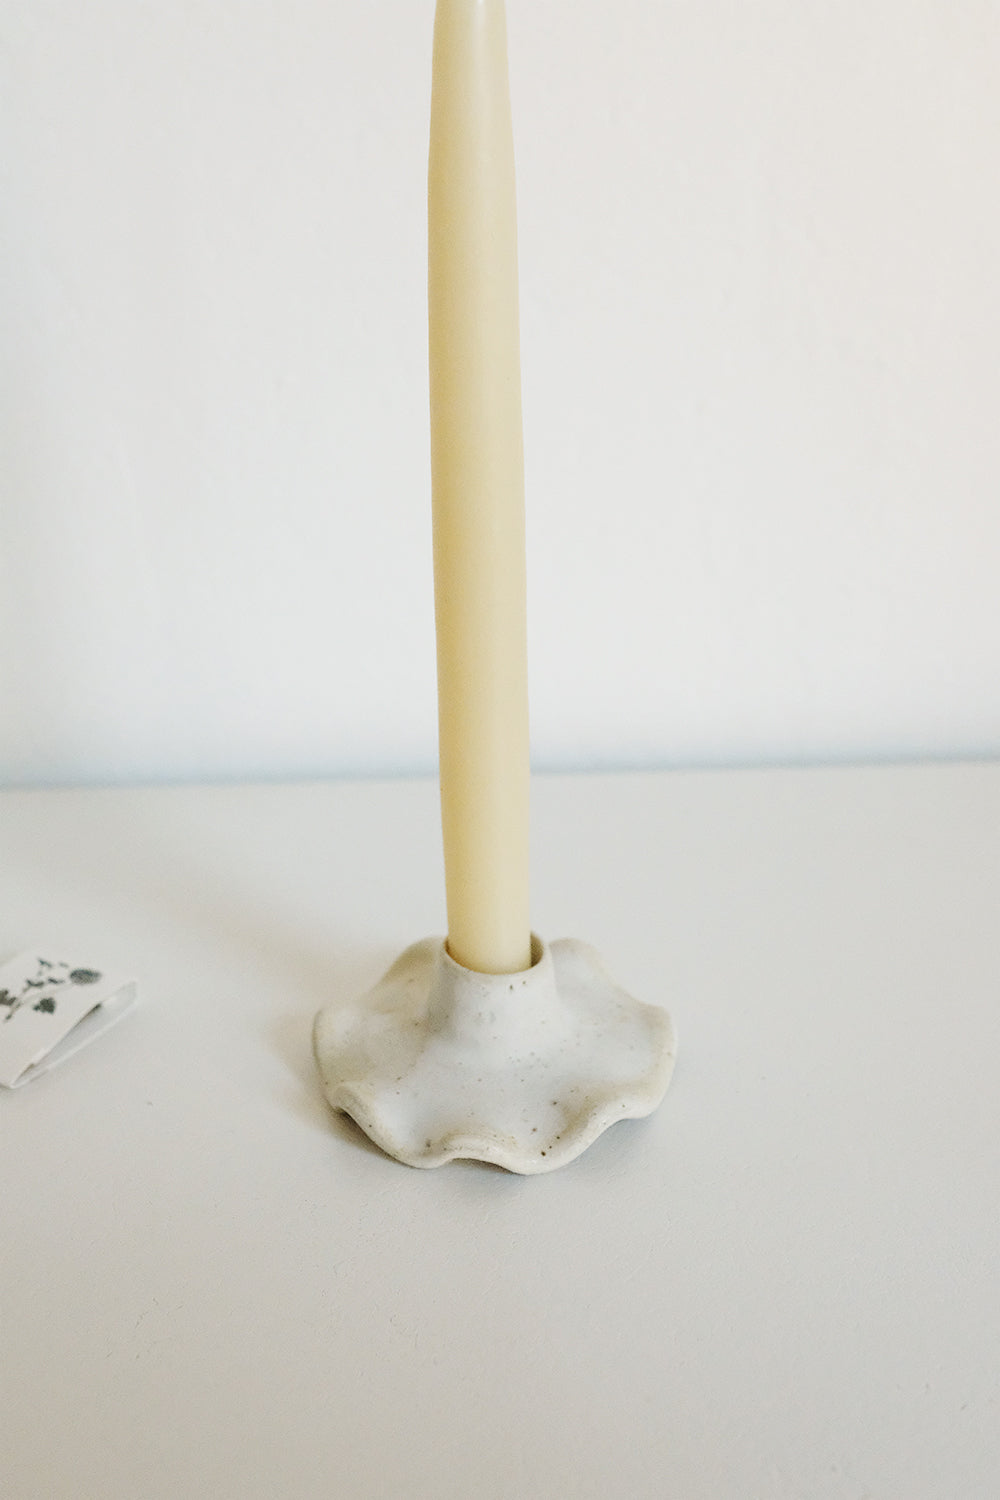 skirted candlestick